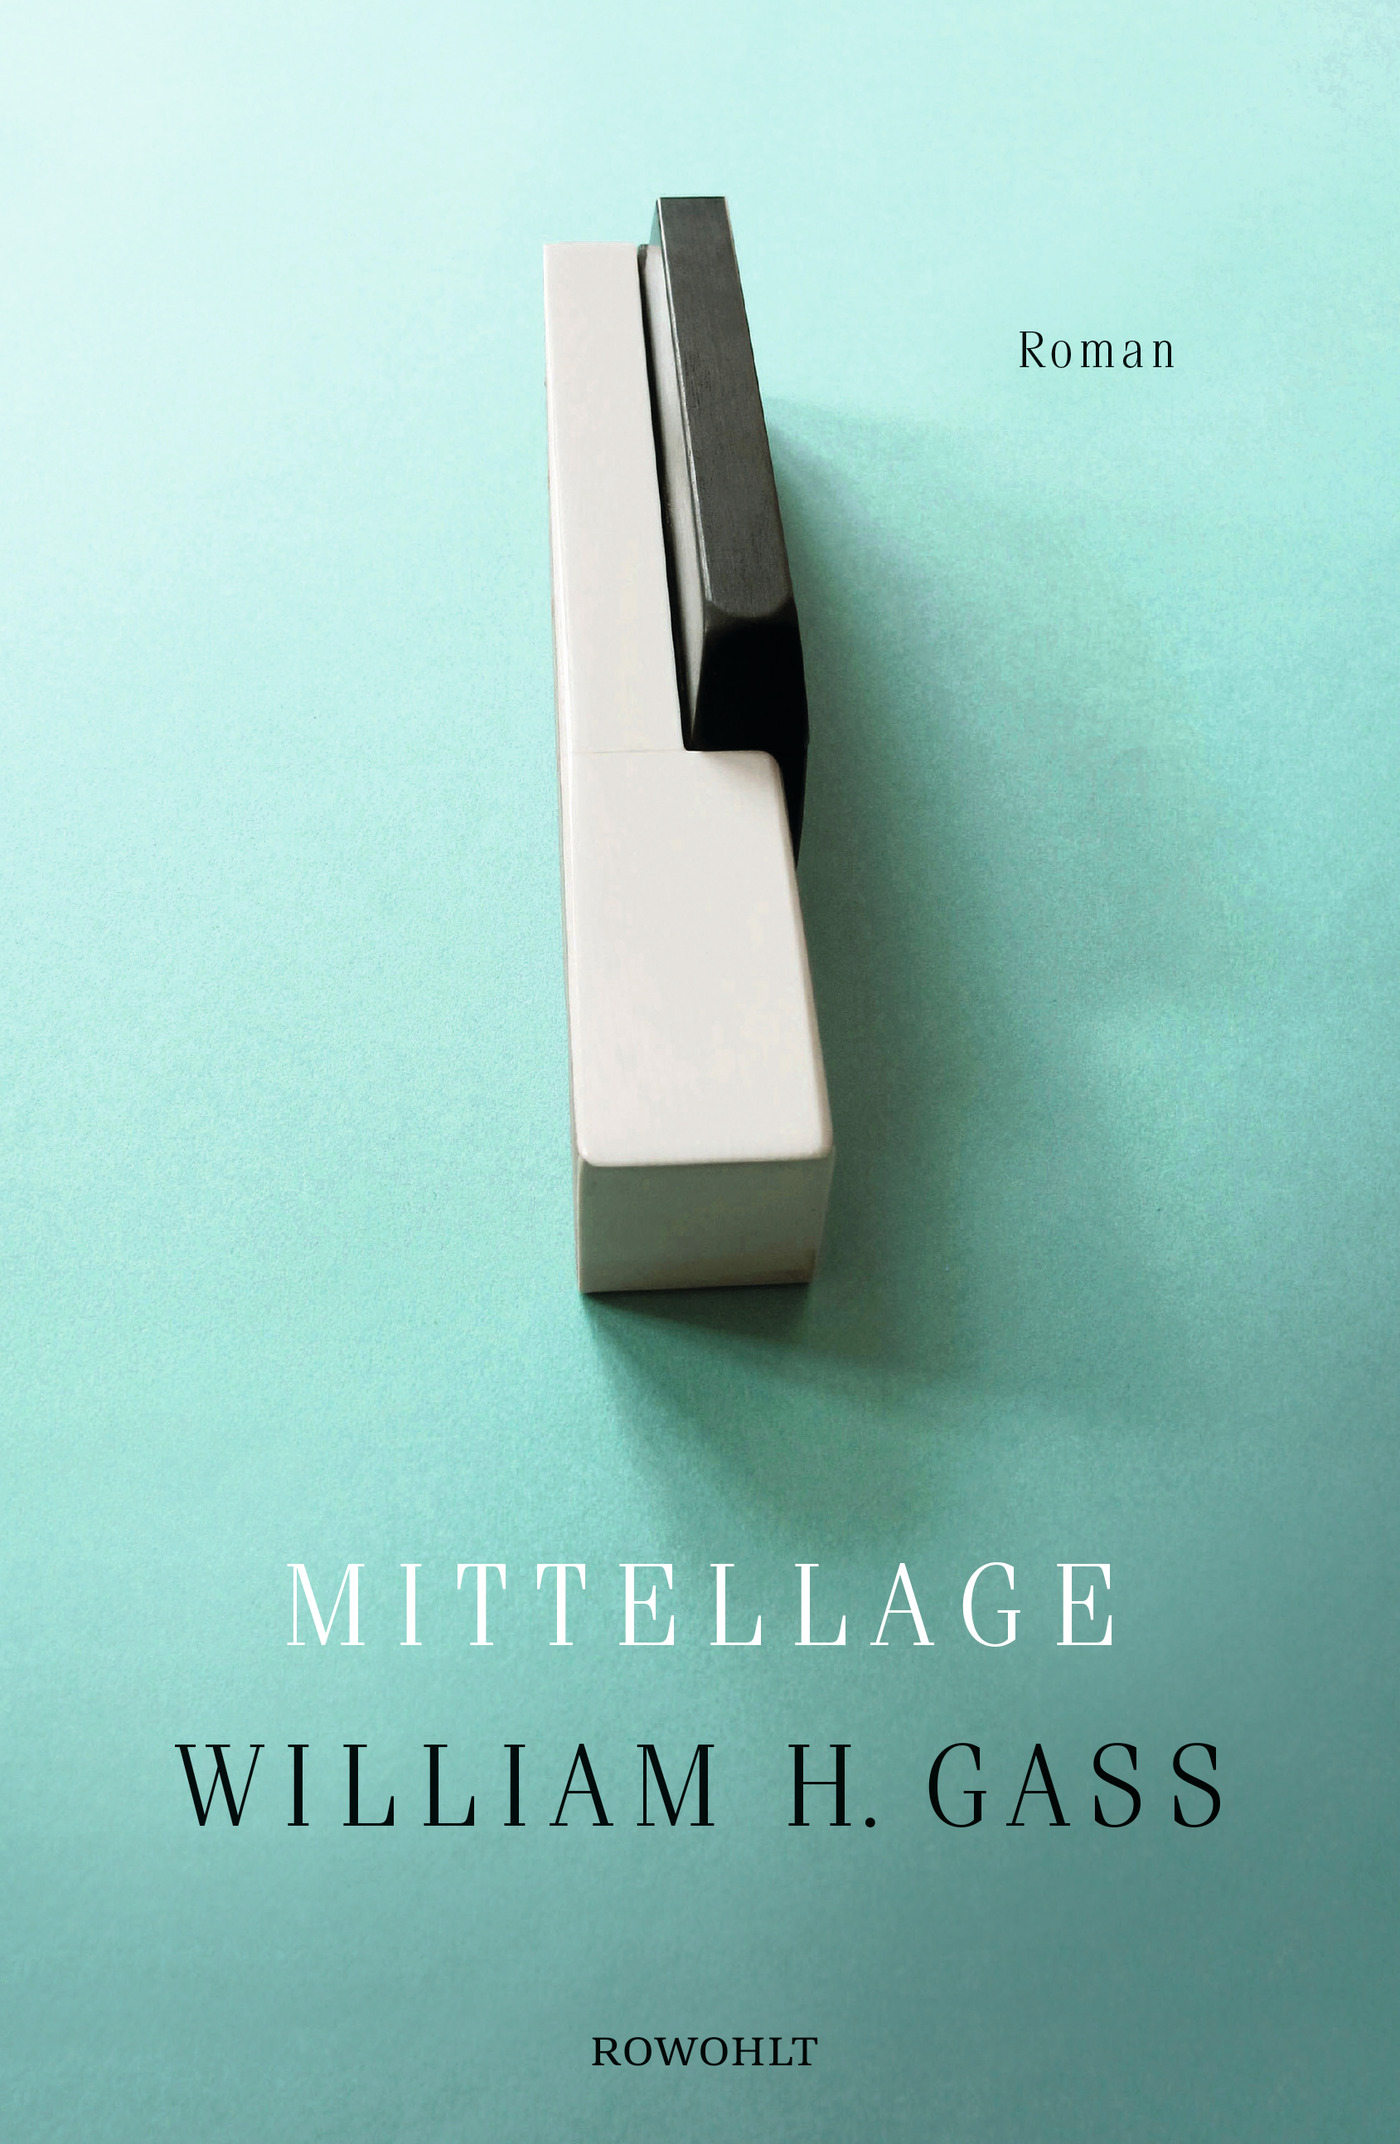 Mittellage William H Gass 9783498025274 - Picture 1 of 1